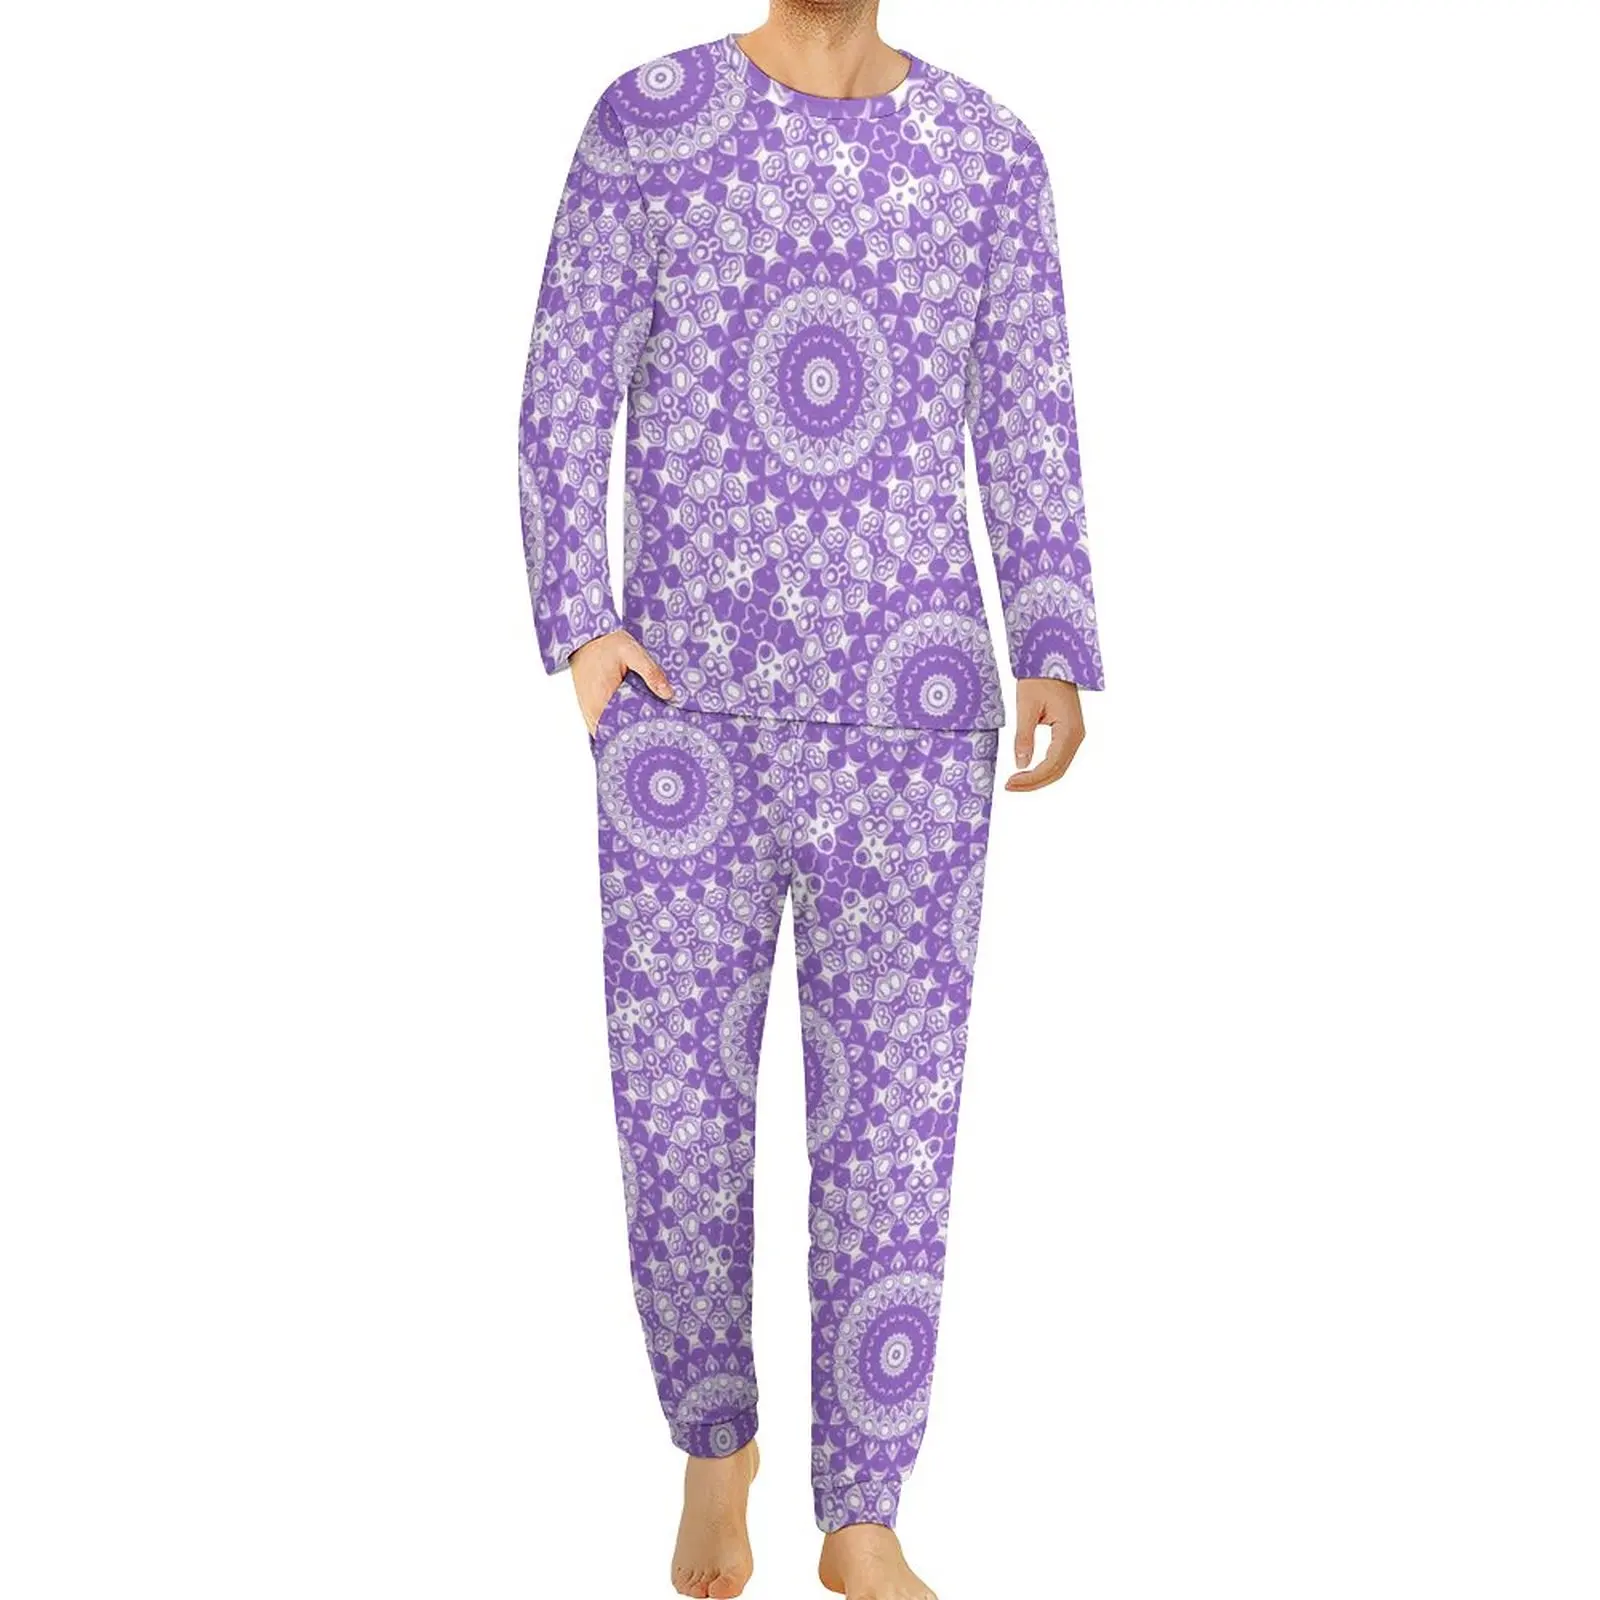 

Amethyst Lavender Mandala Pajamas Men Purple And White Print Teal Floral Cool Nightwear Two Piece Casual Graphic Pajama Sets